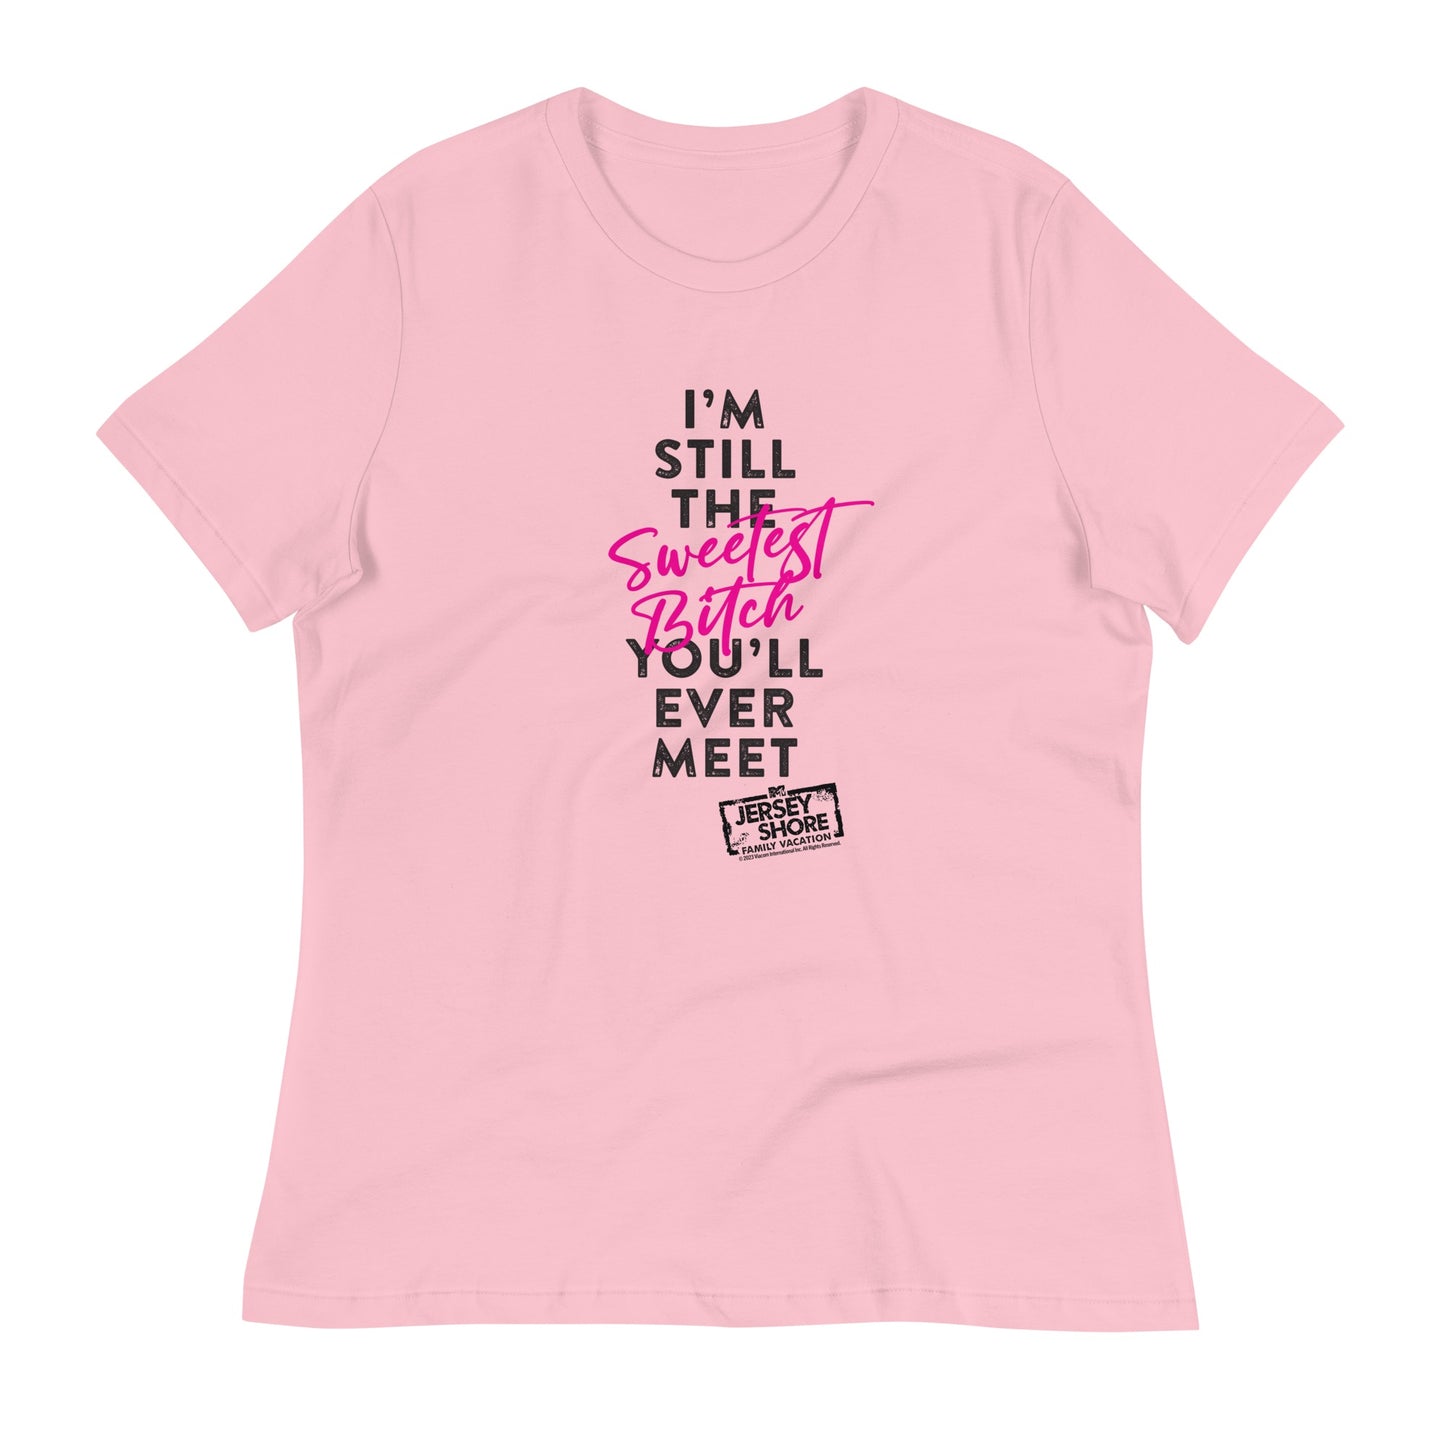 Jersey Shore Family Vacation T-shirt "I'm Still the Sweetest" (Je suis toujours la plus belle)